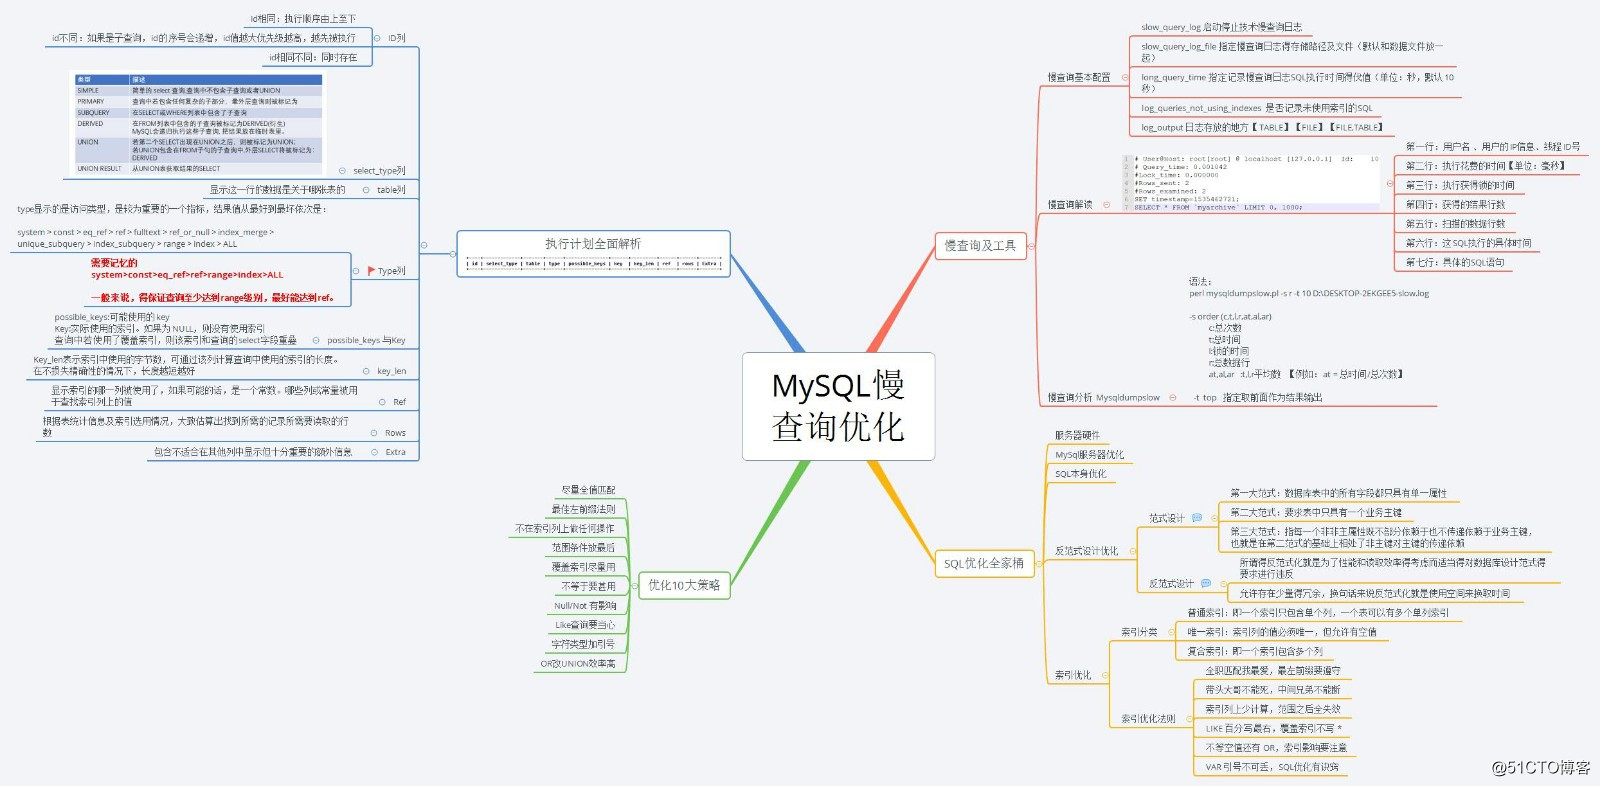 Slow MySQL query optimization